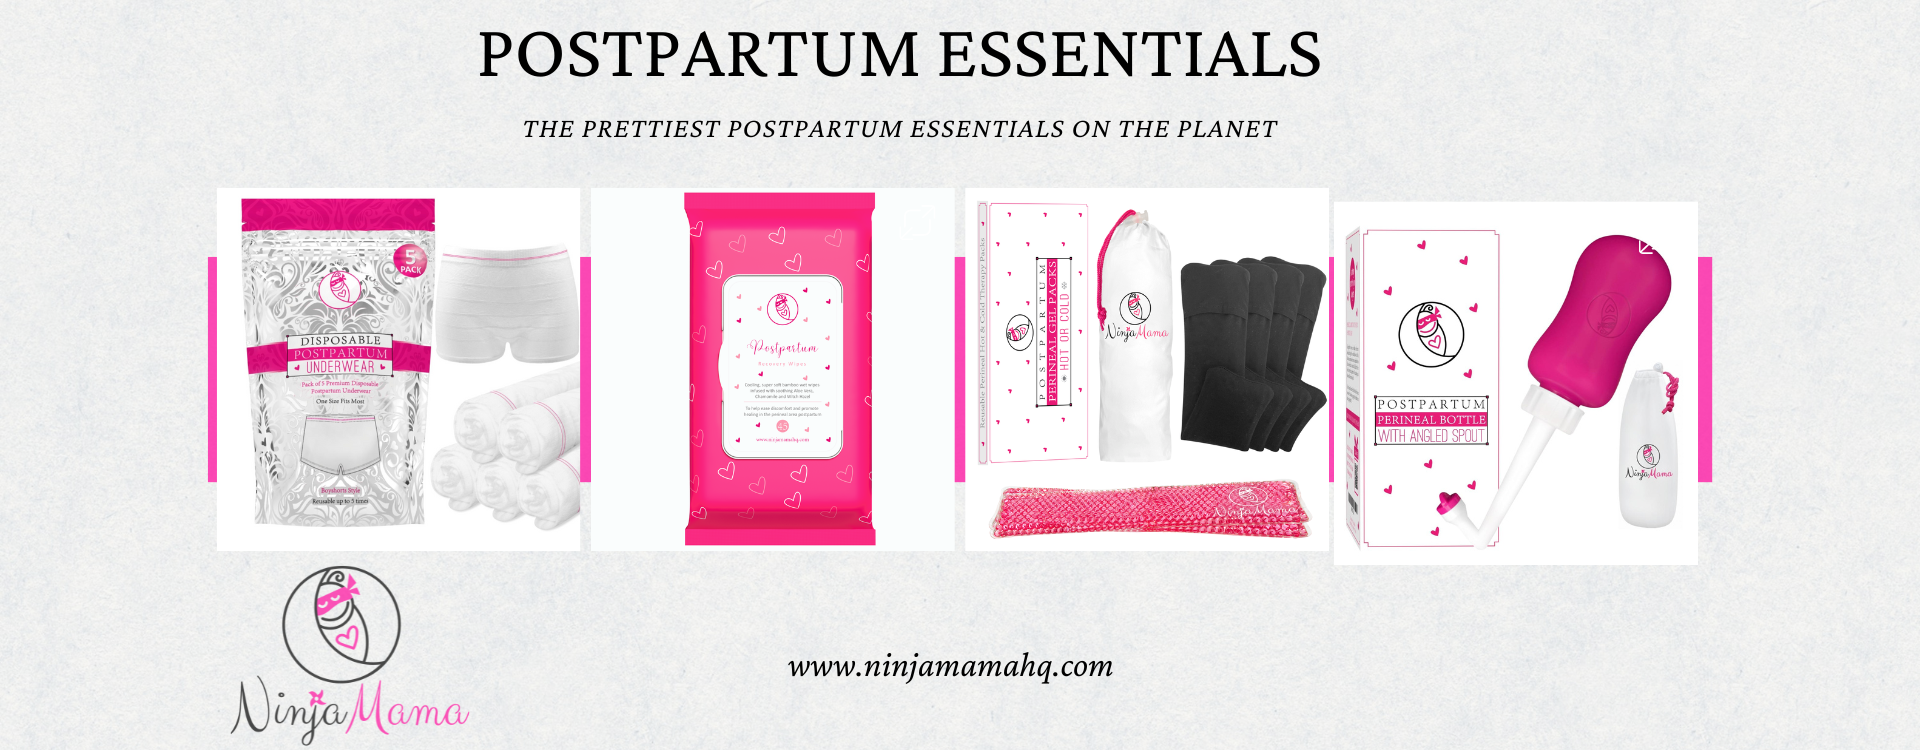  Ninja Mama Peri Bottle For Postpartum Care Post Partum  Essentials Large Portable Perineal Bottle